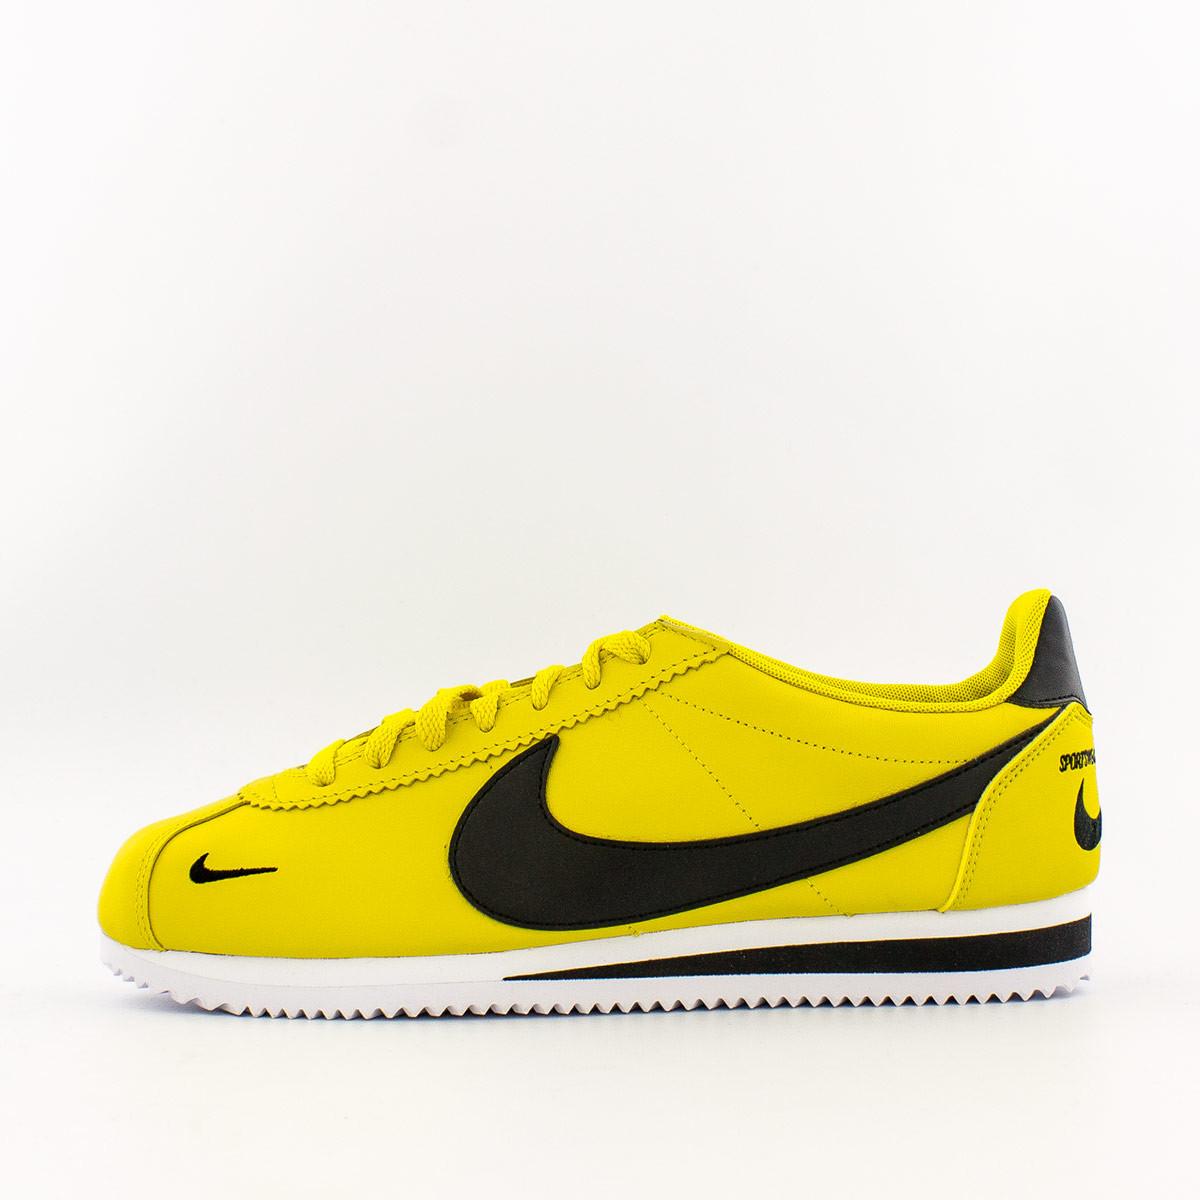 Nike Classic Cortez Premium in Yellow 